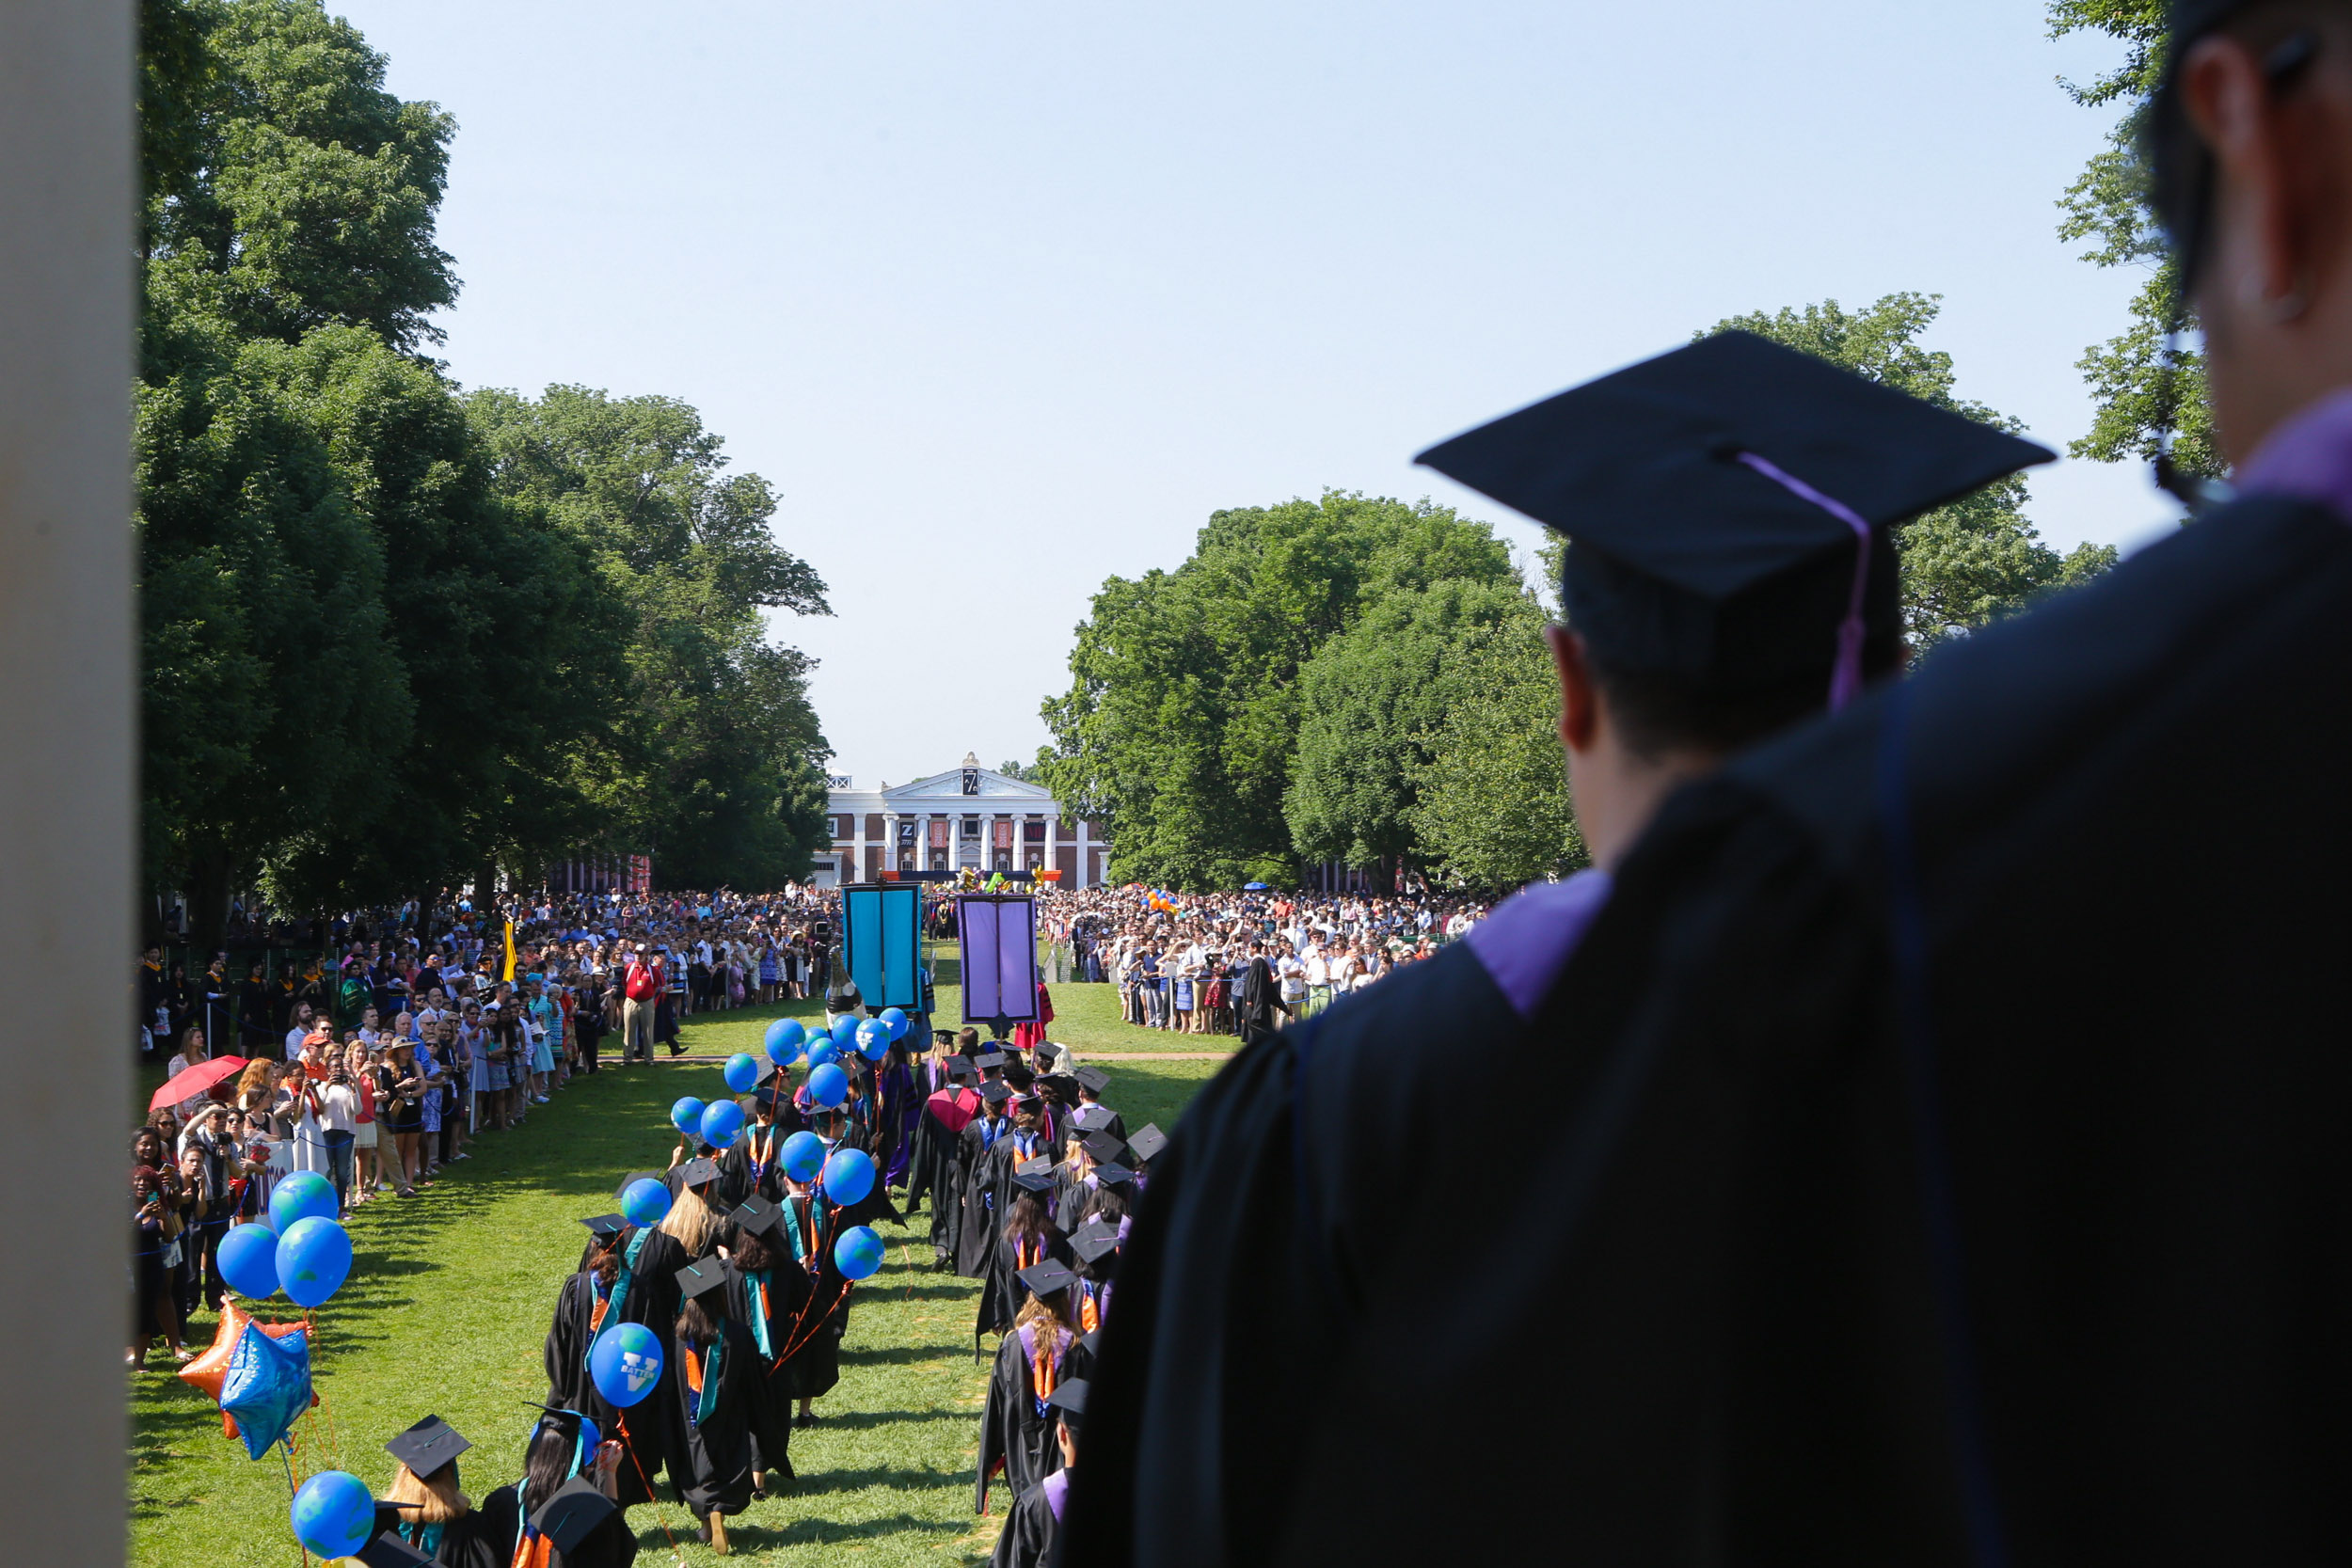 Graduates walking the lawn to their seats